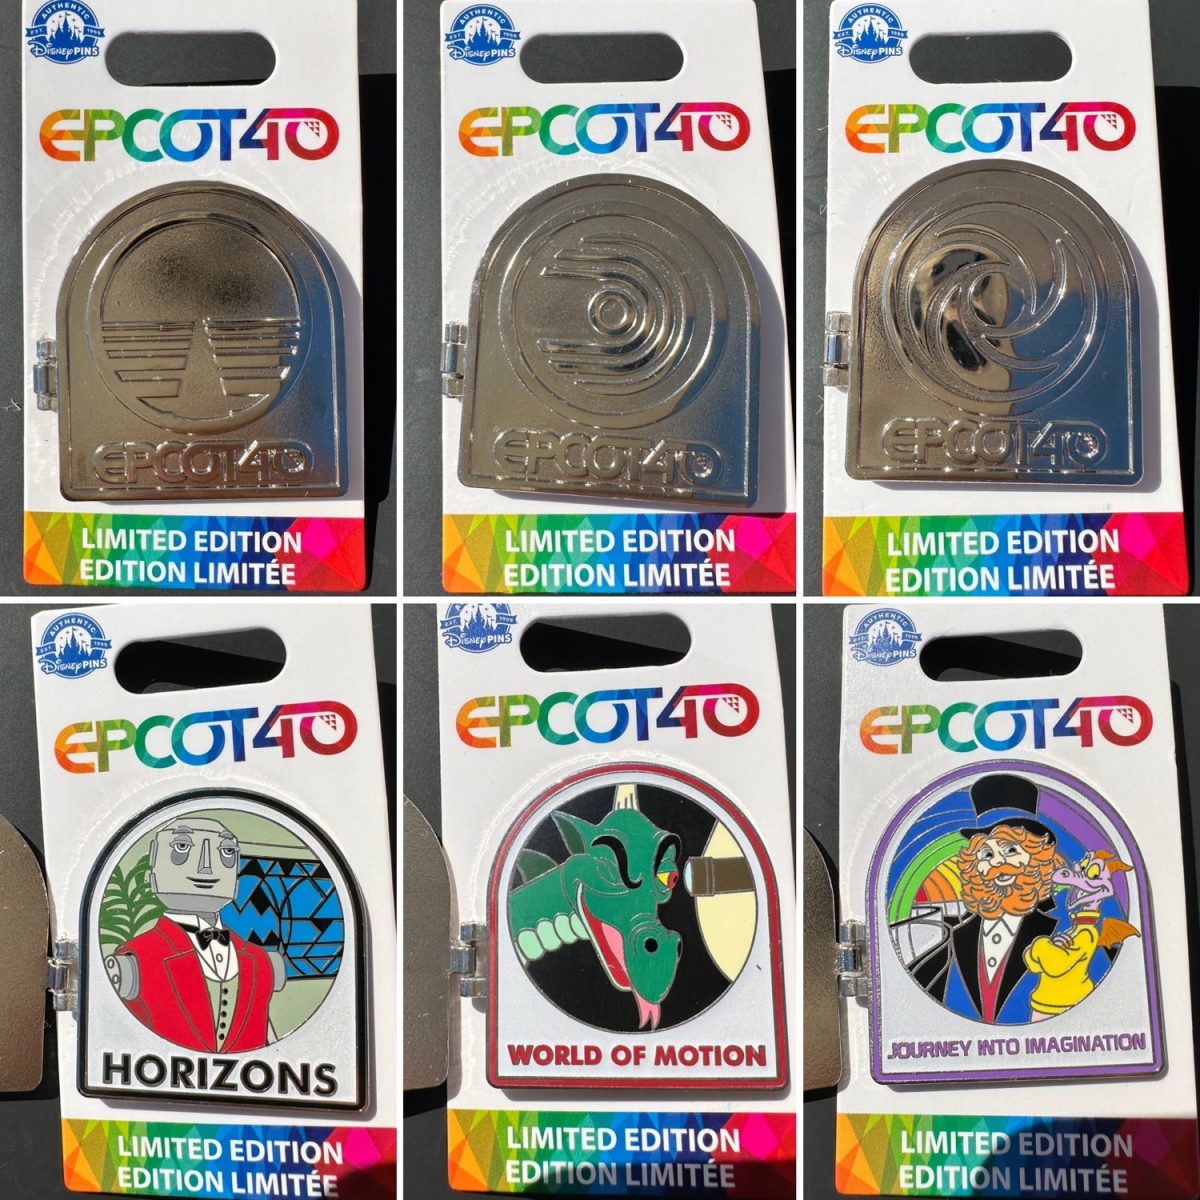 Attraction Pin Series - Epcot 40th Anniversary